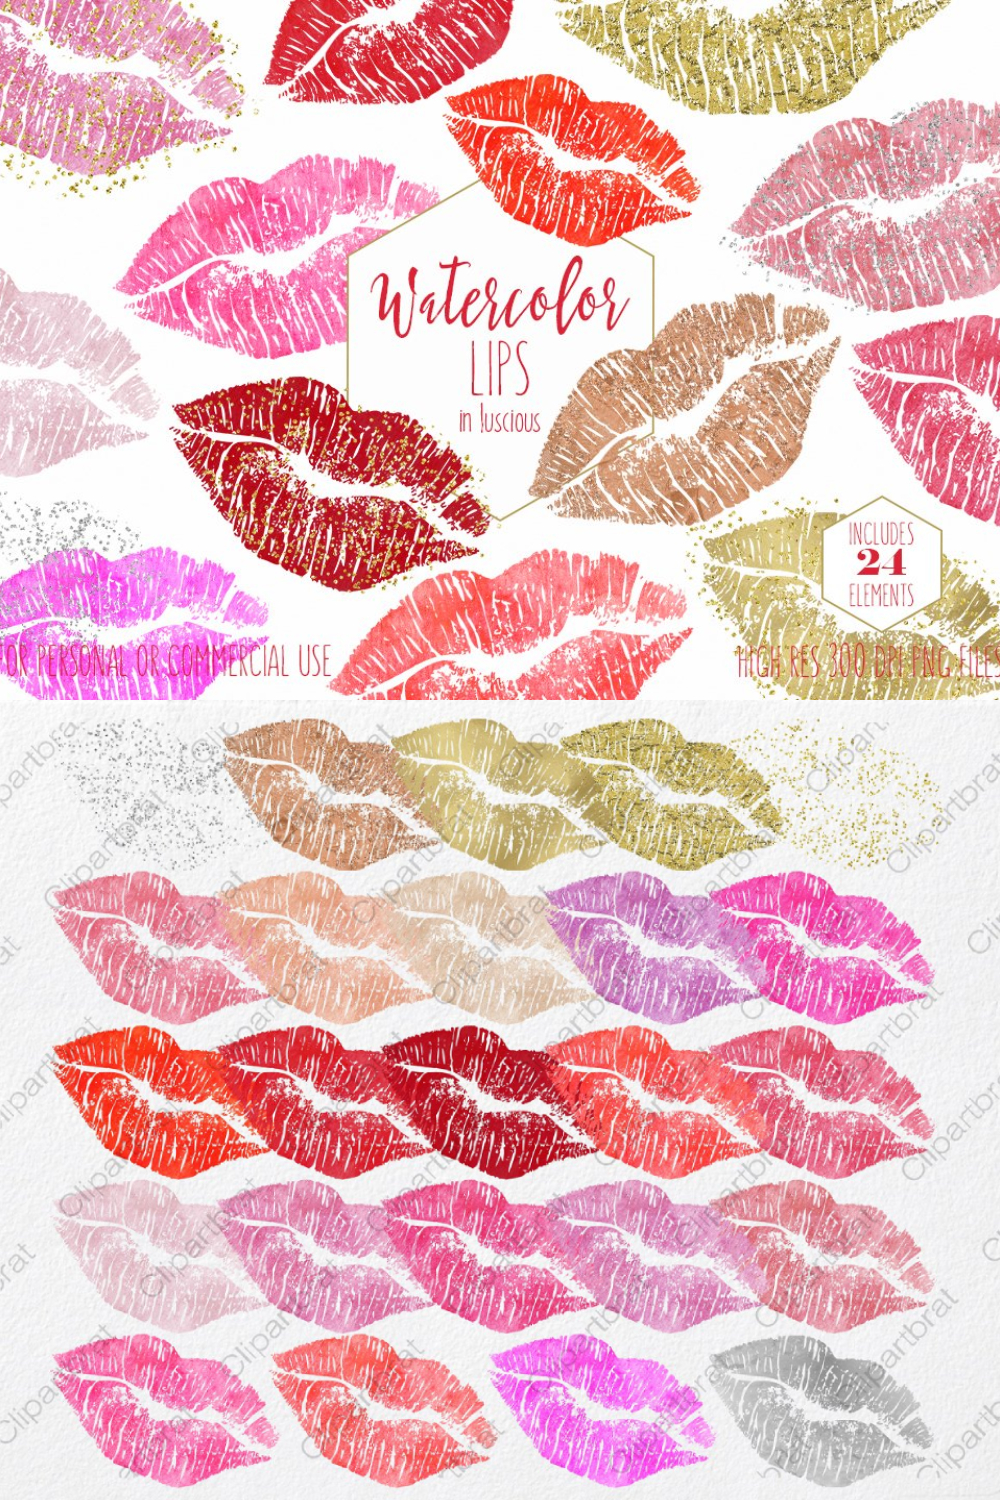 Watercolor Lips Lipstick Kisses - Pinterest.